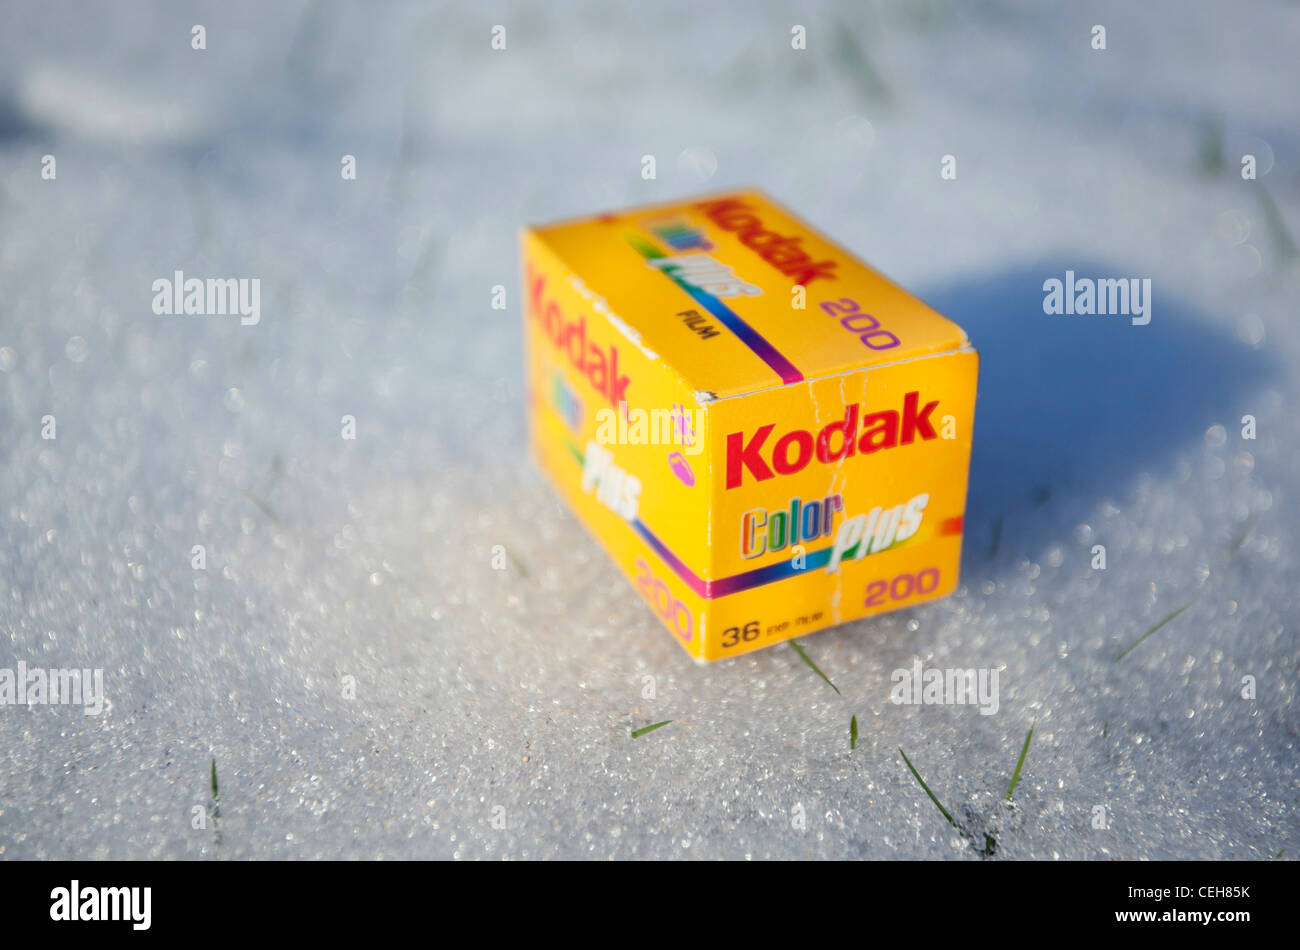 Kodak film box on snow Stock Photo